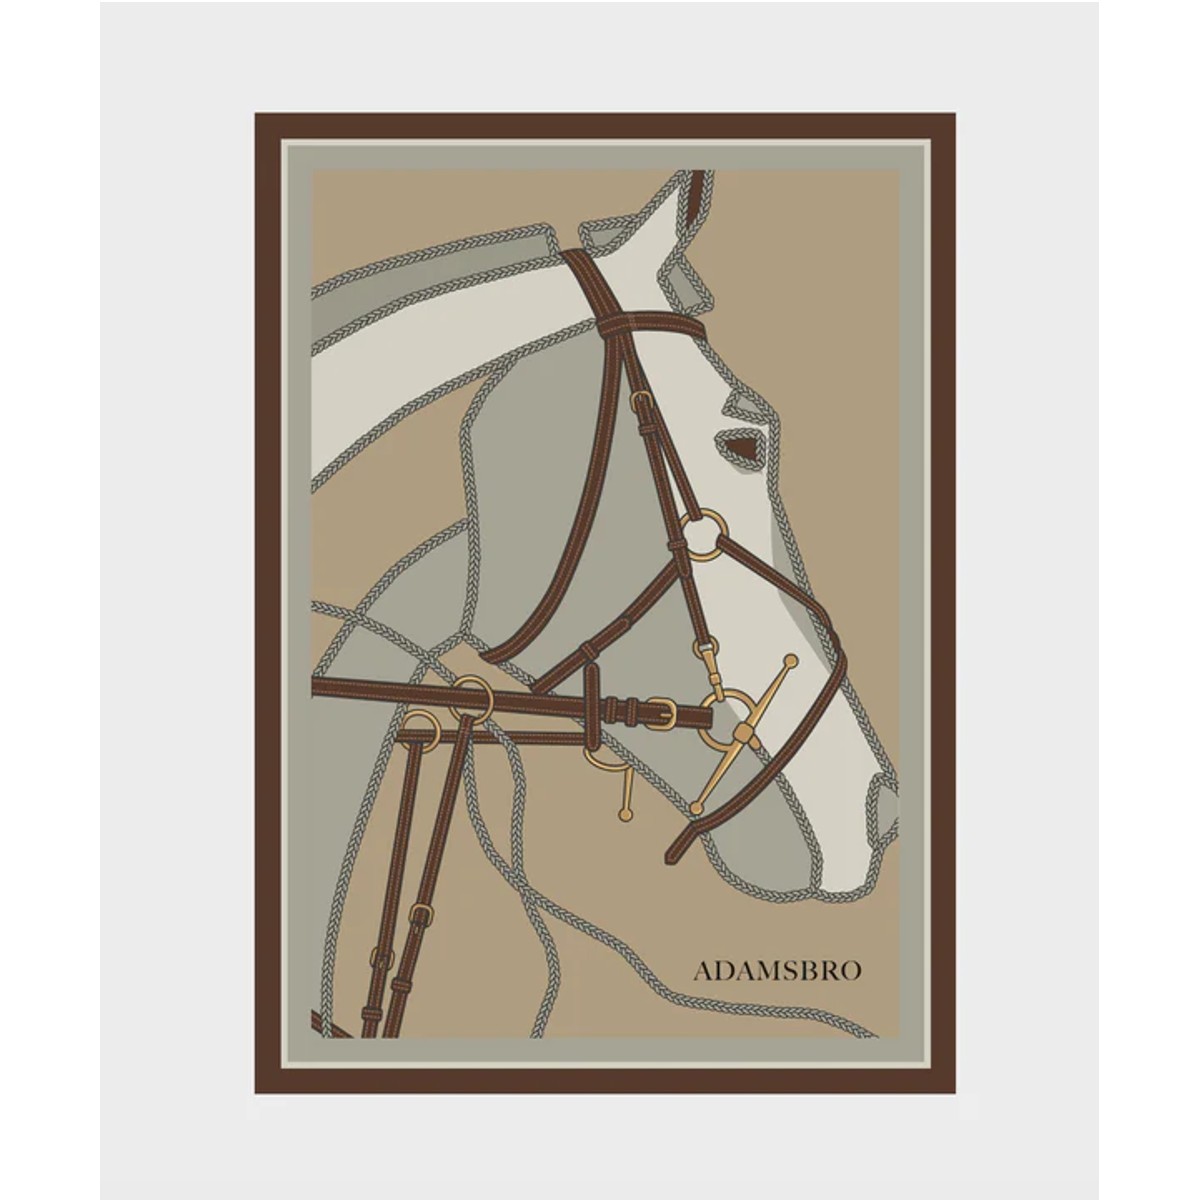 Adamsbro poster héritage beige Sellerie En Cadence Montfort l'Amaury décoration affiche cheval art